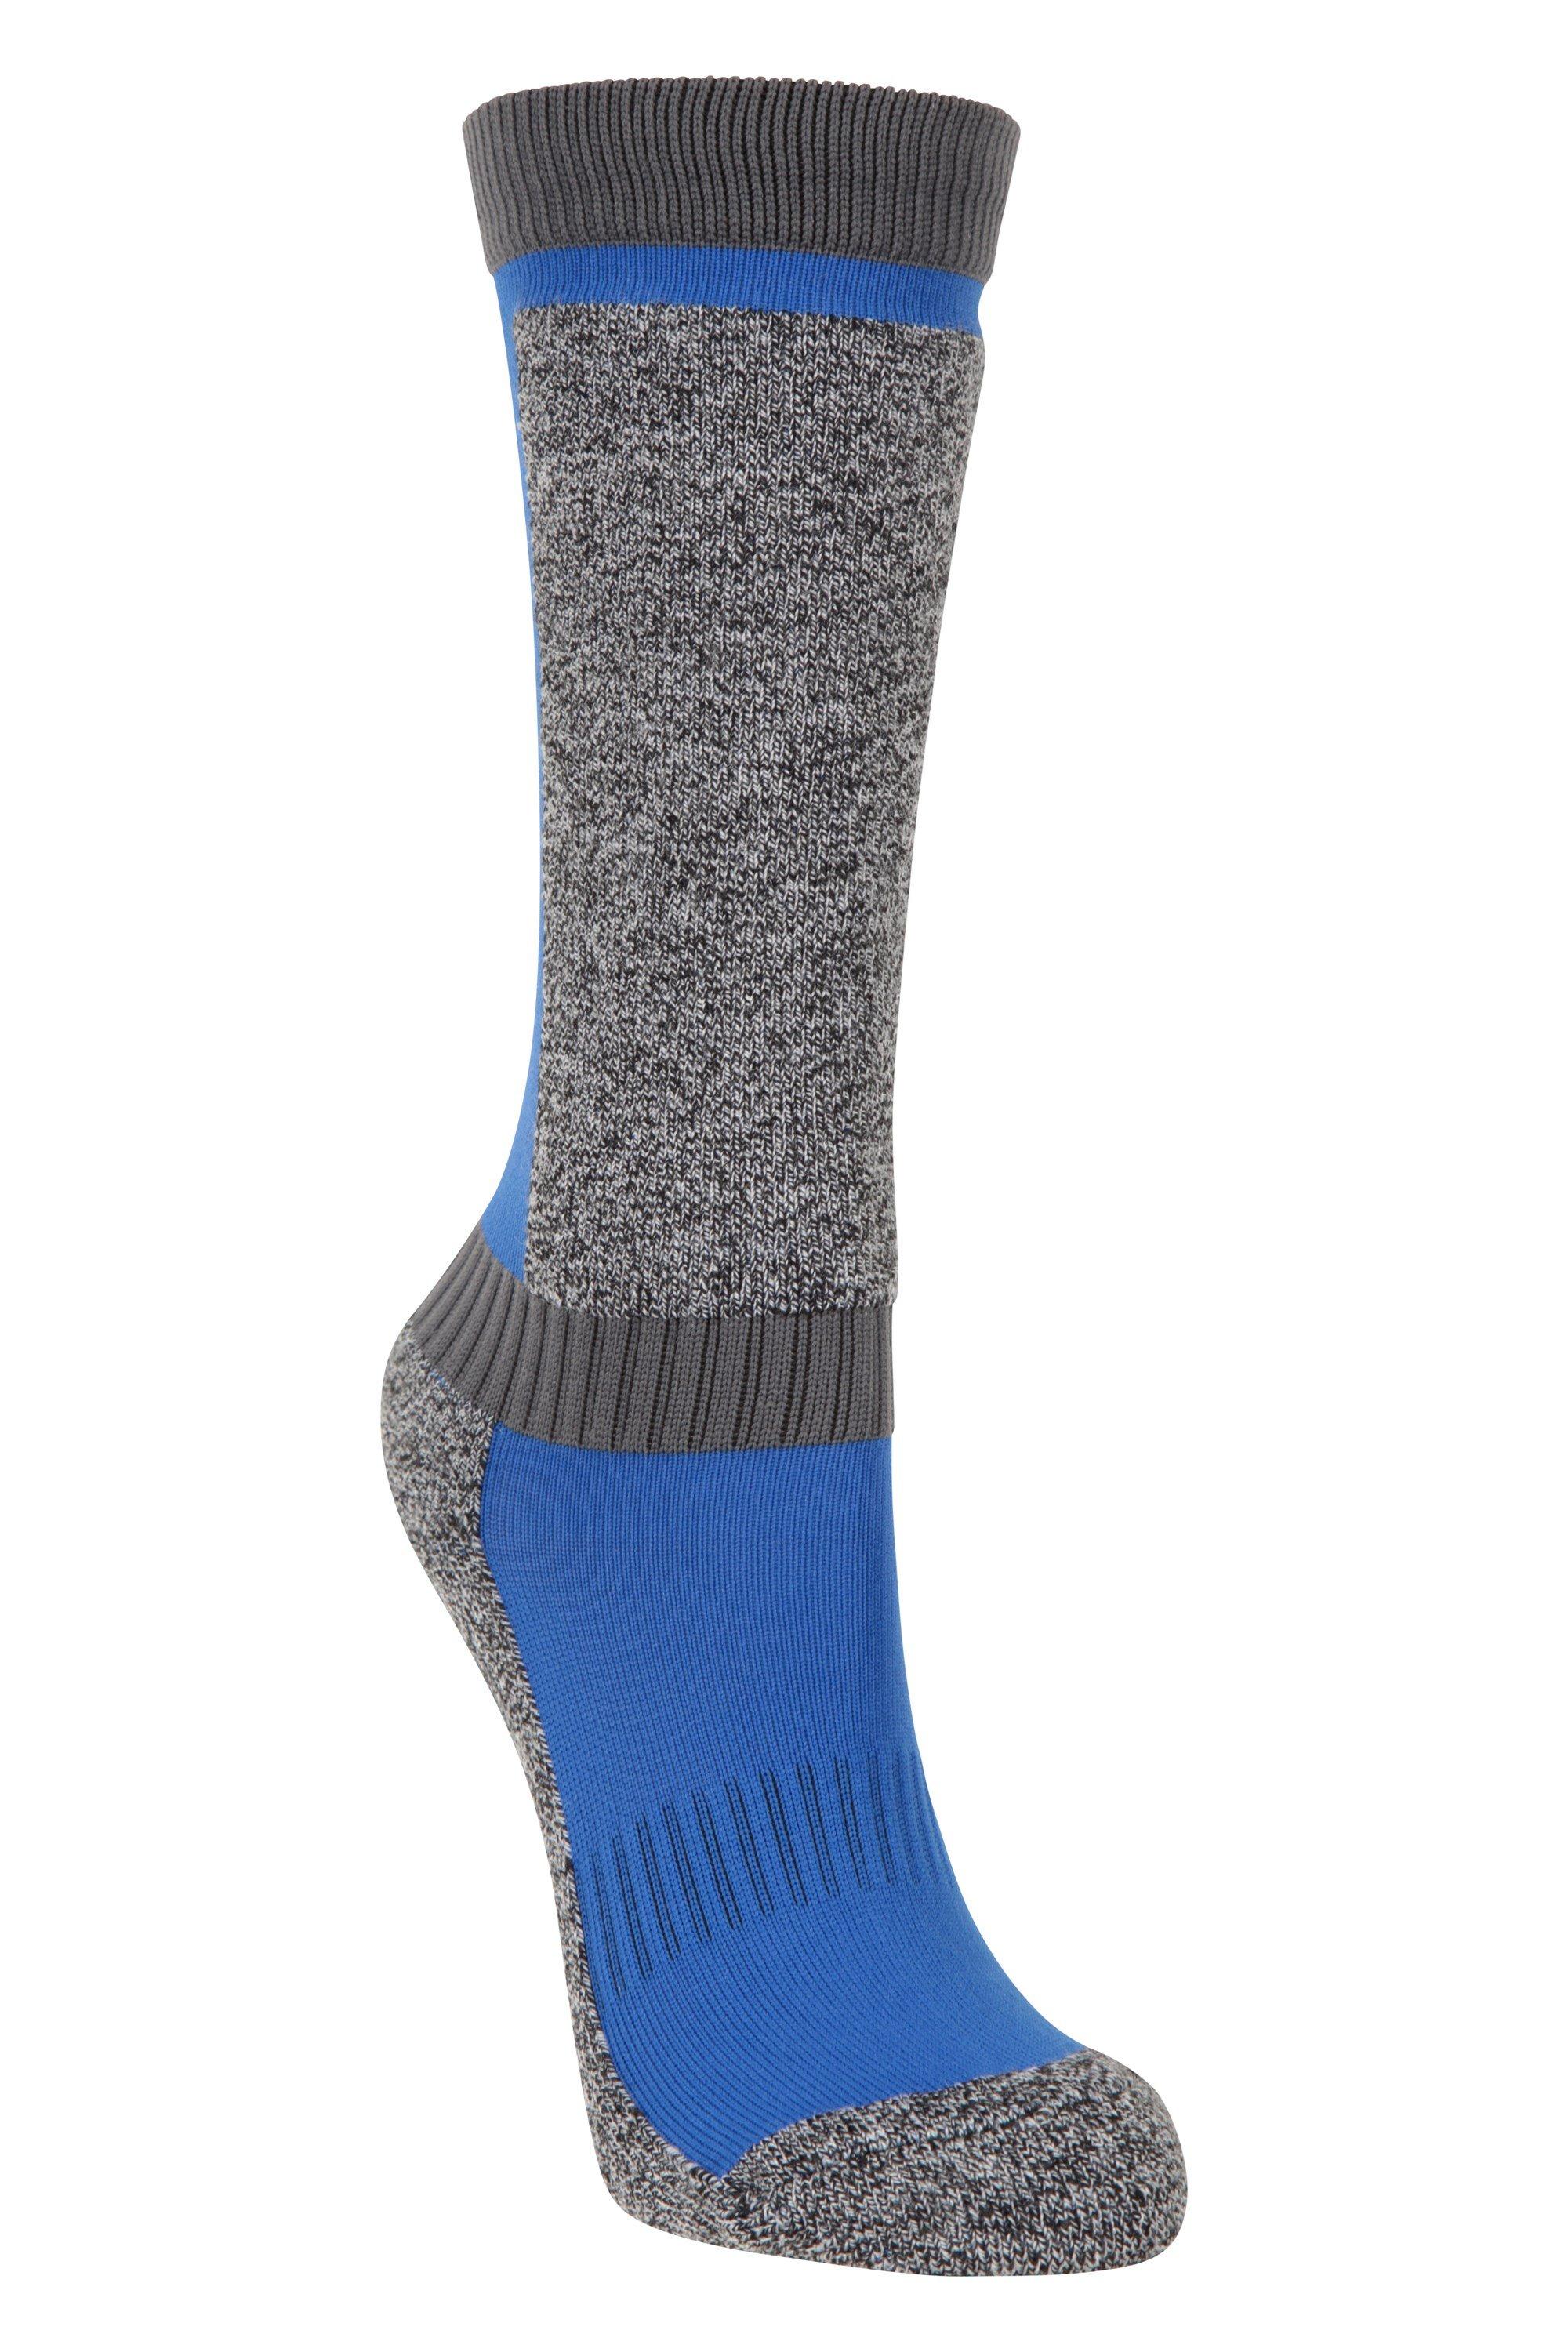 Technical Ski Sock Cushioned Quick Drying Warm Socks